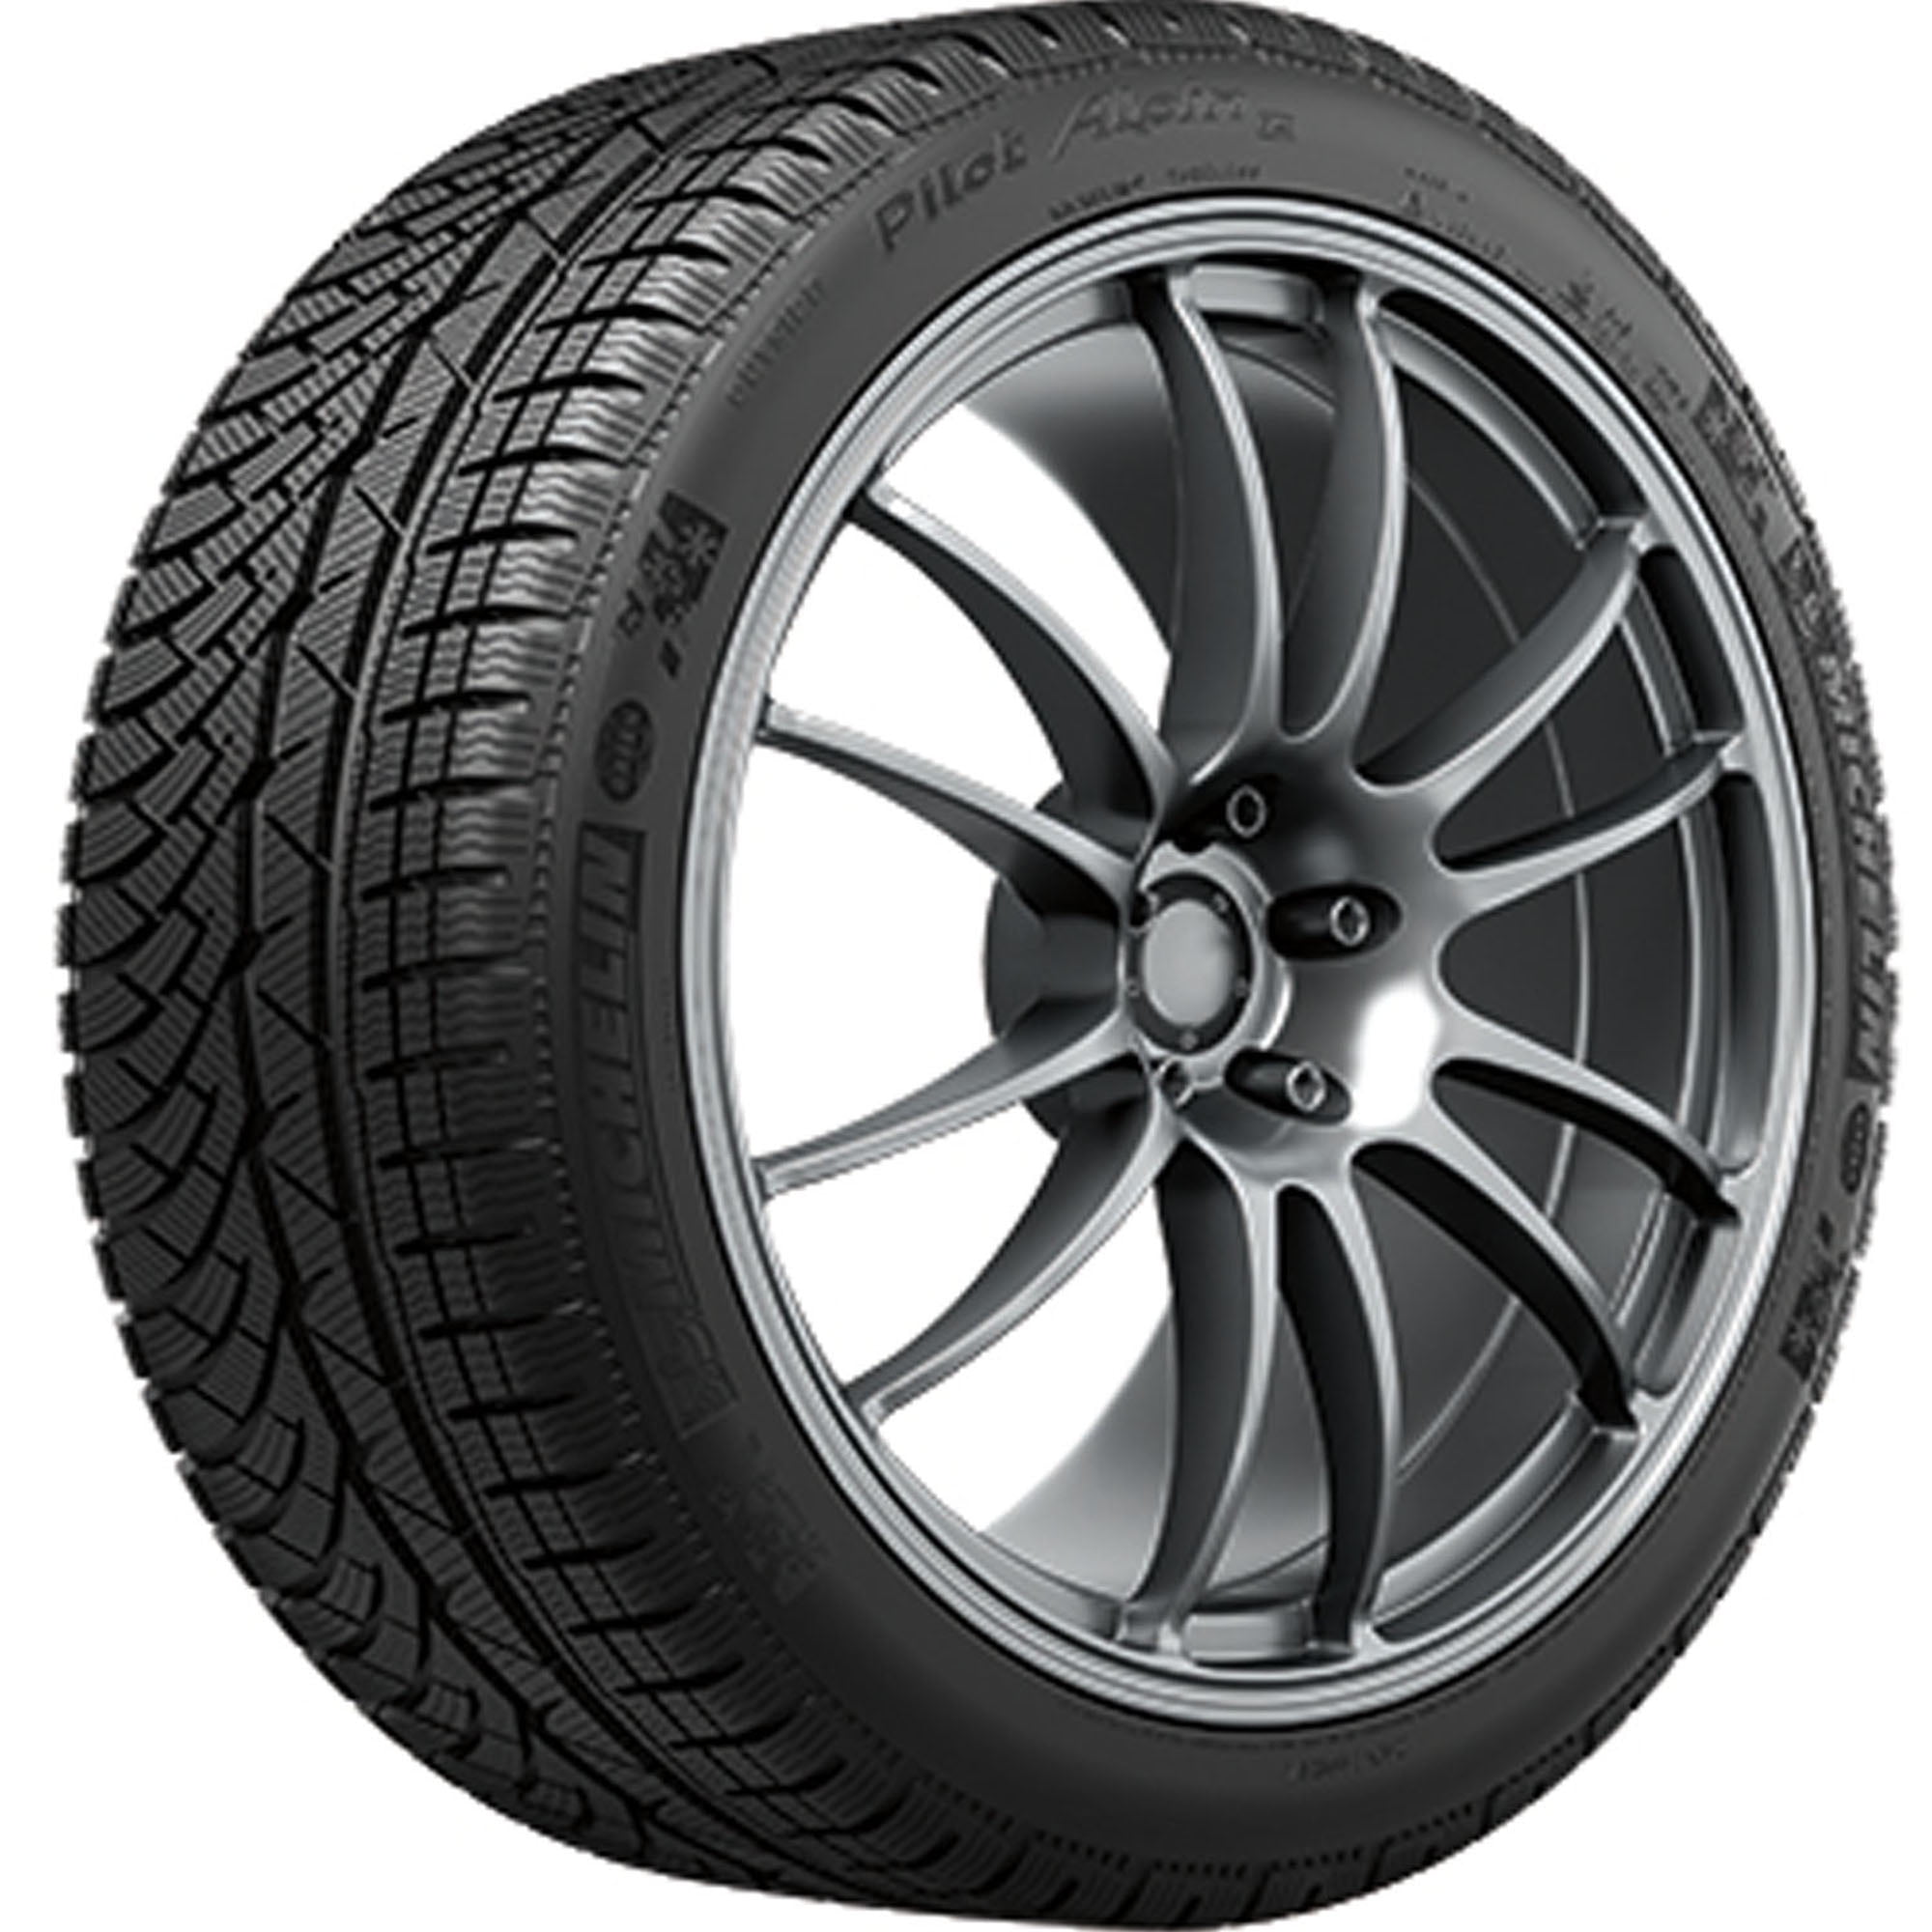 Pirelli W240 SottoZero Serie II Winter 245/35R18 92V XL Passenger Tire